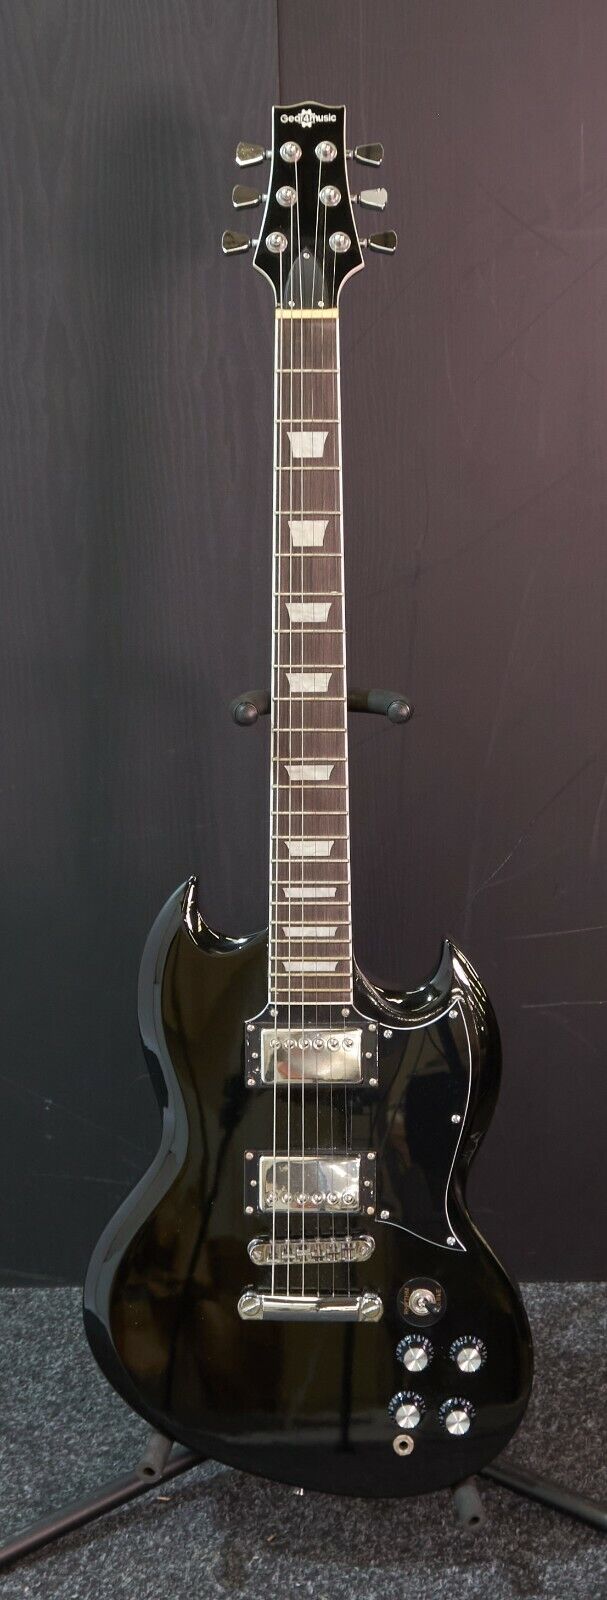 Brooklyn Electric Guitar by Gear4music, Black-DAMAGED-RRP £149